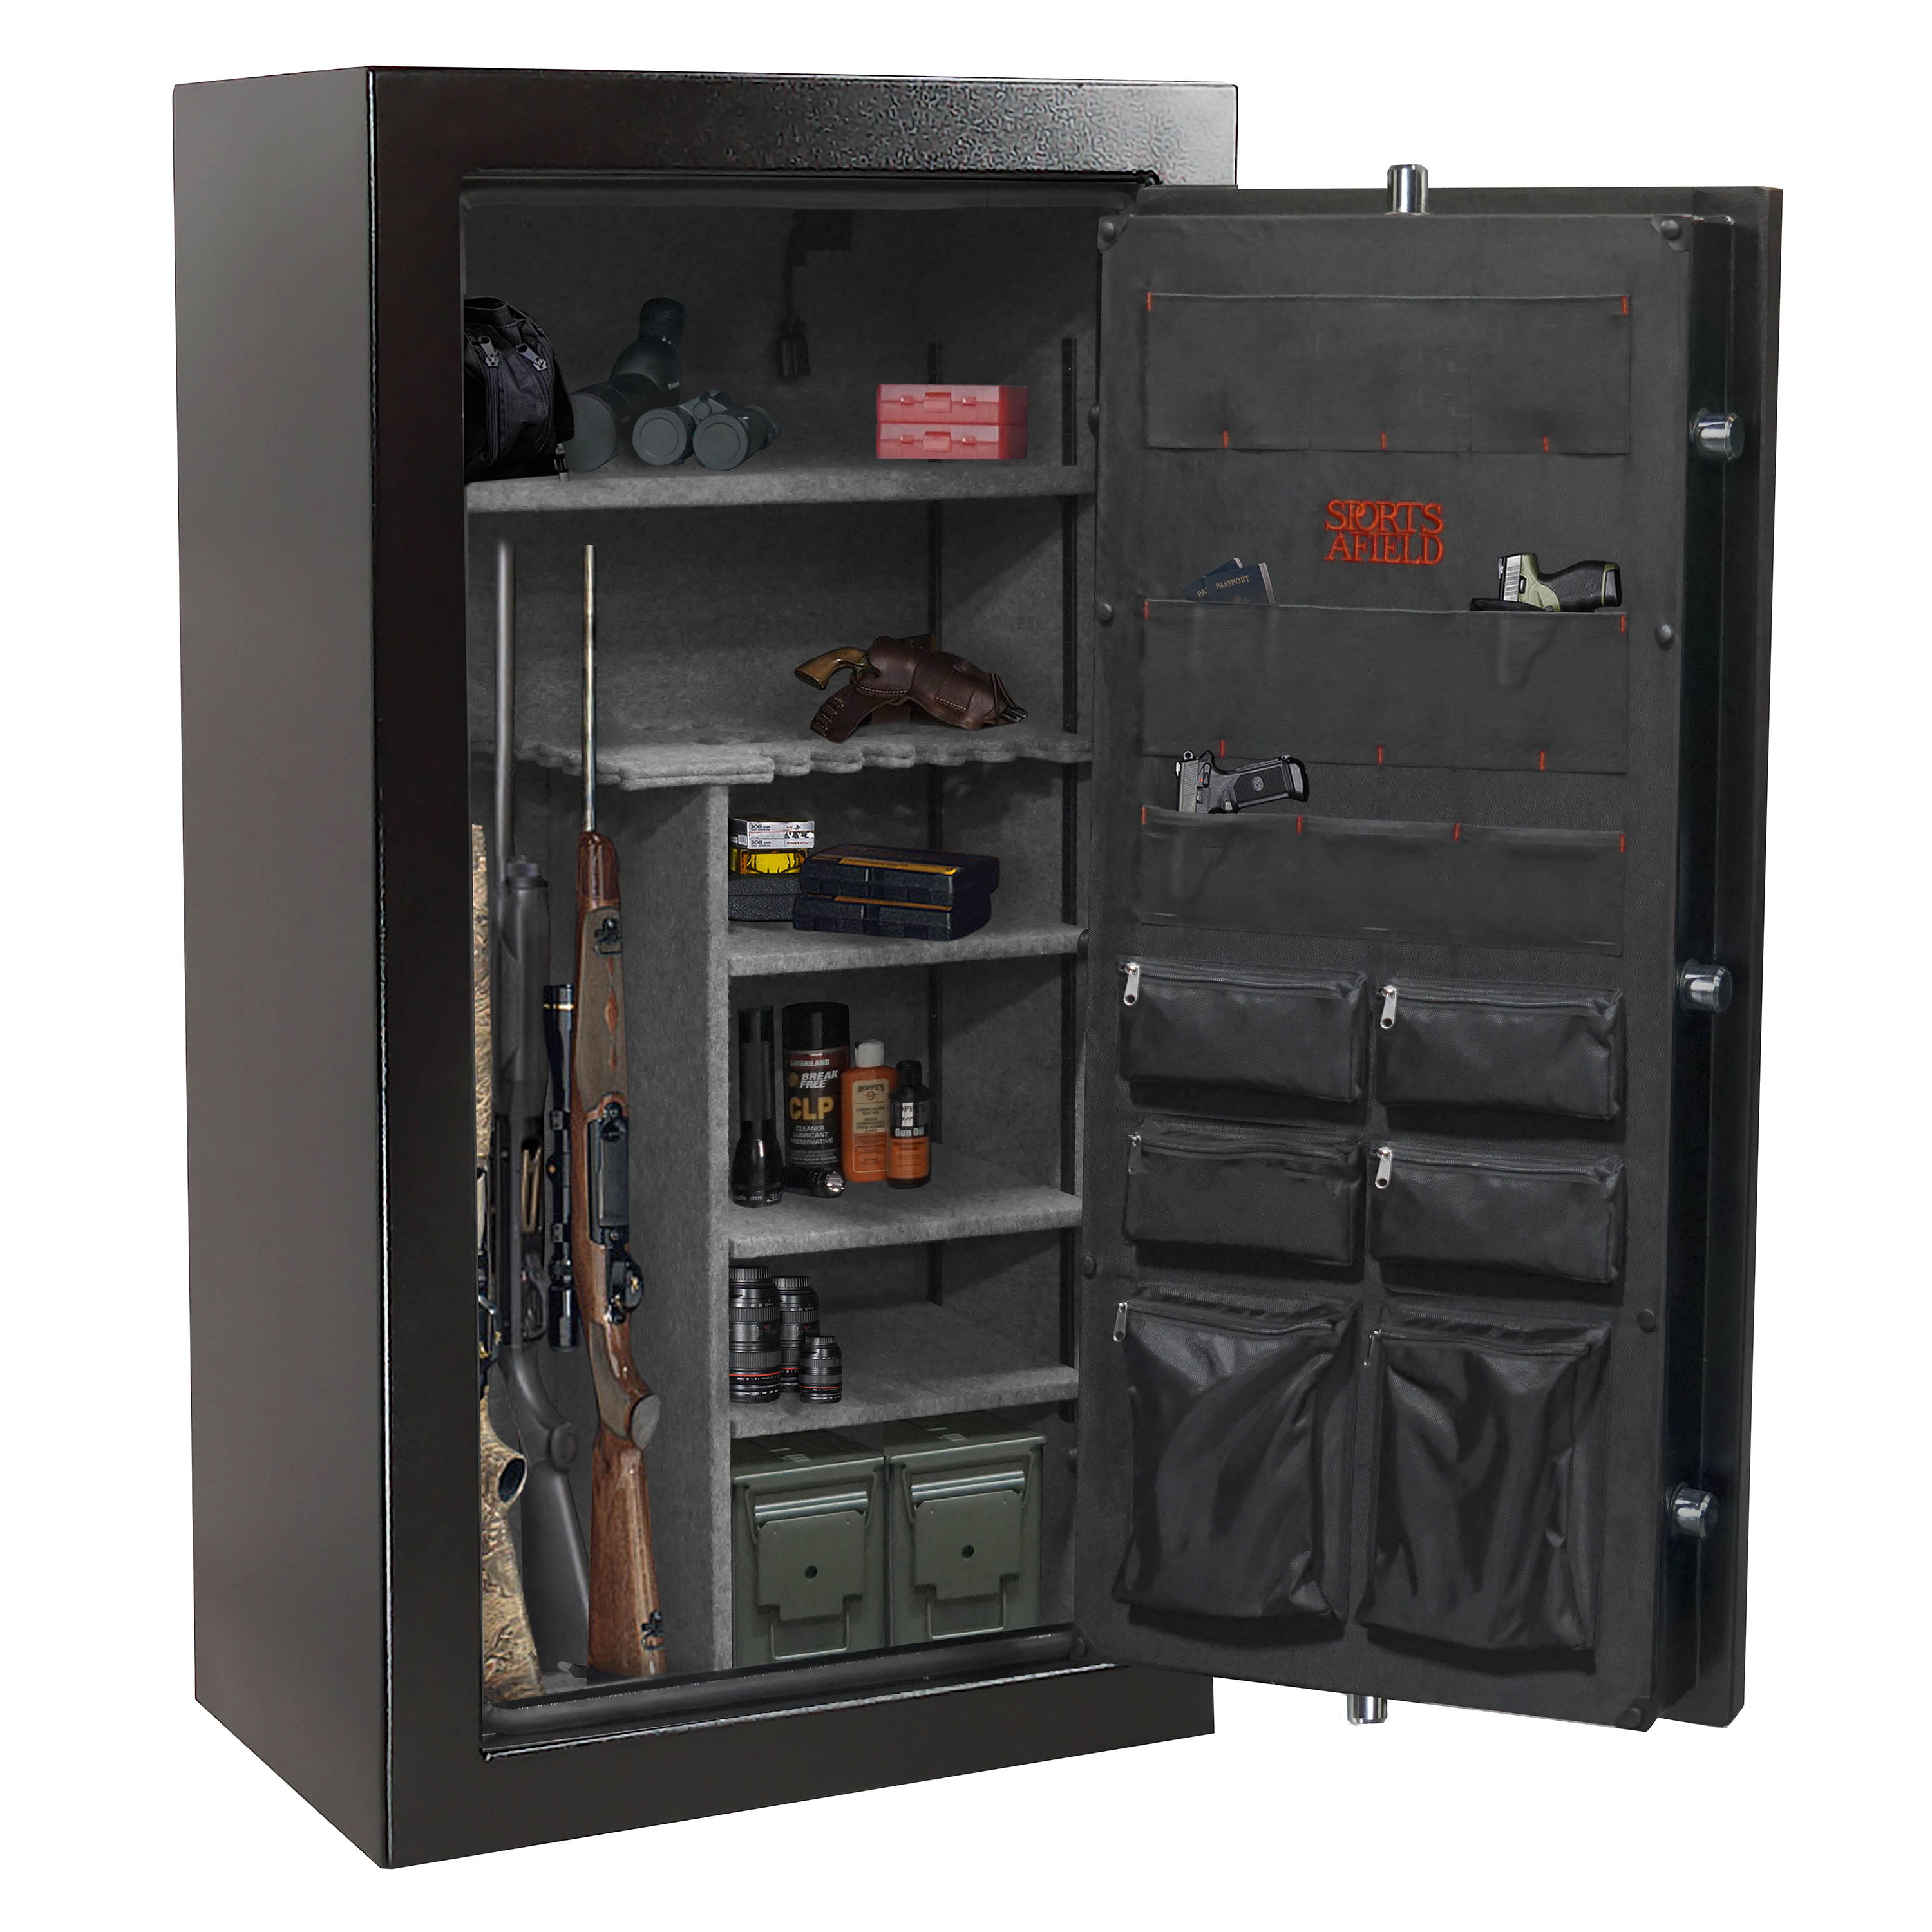 Sports Afield Preserve SA5932P 45-Minute 24 Gun Fire/Waterproof Safe